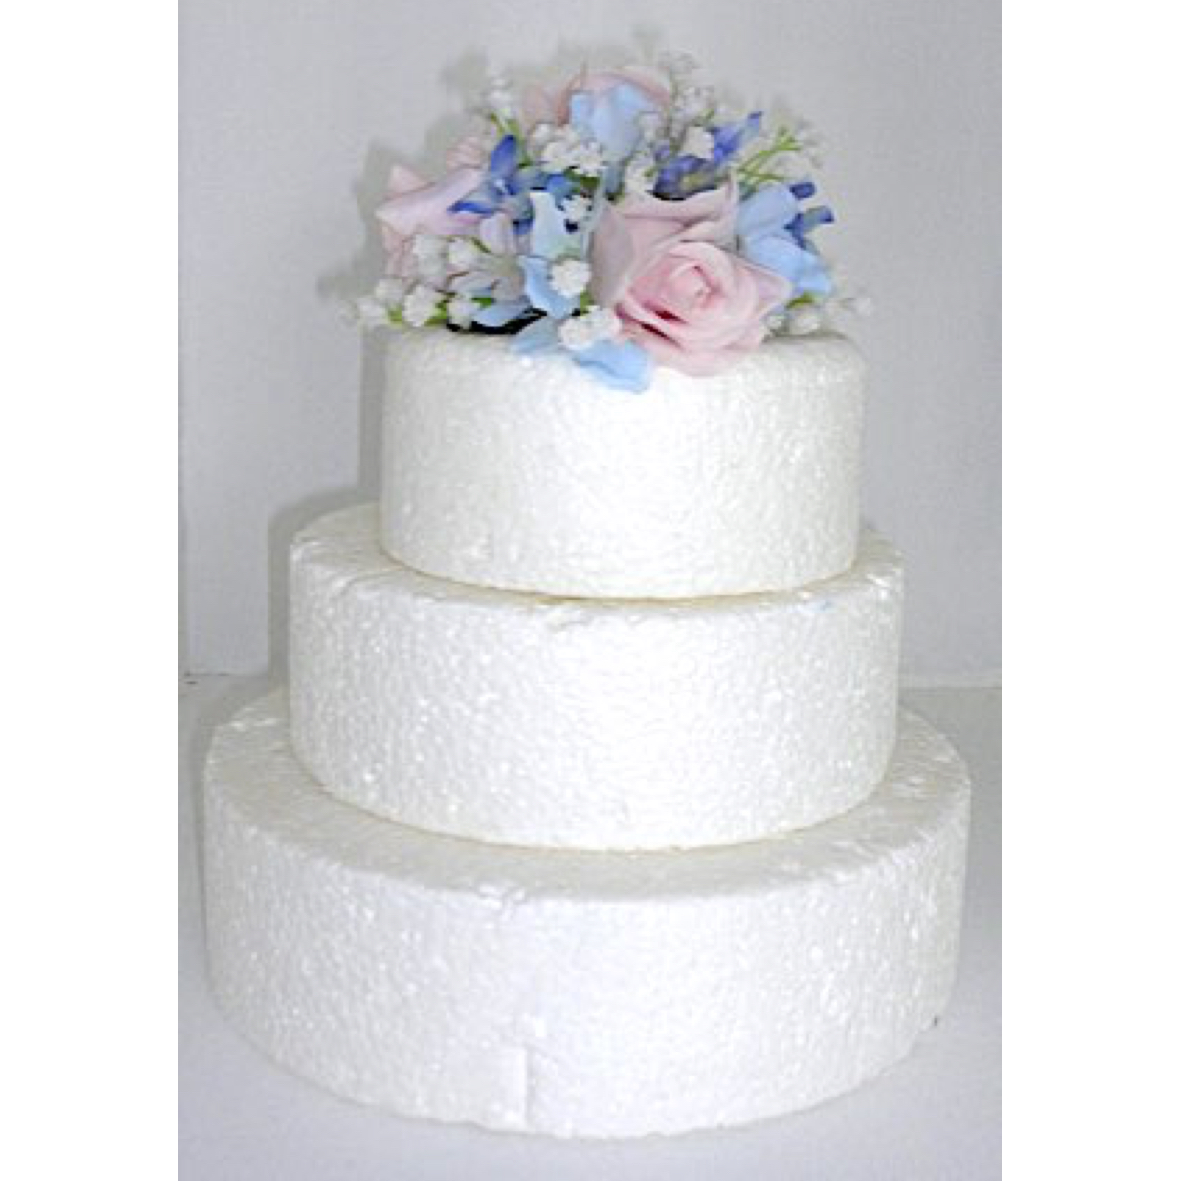 Pink & Blue Cake Flowers